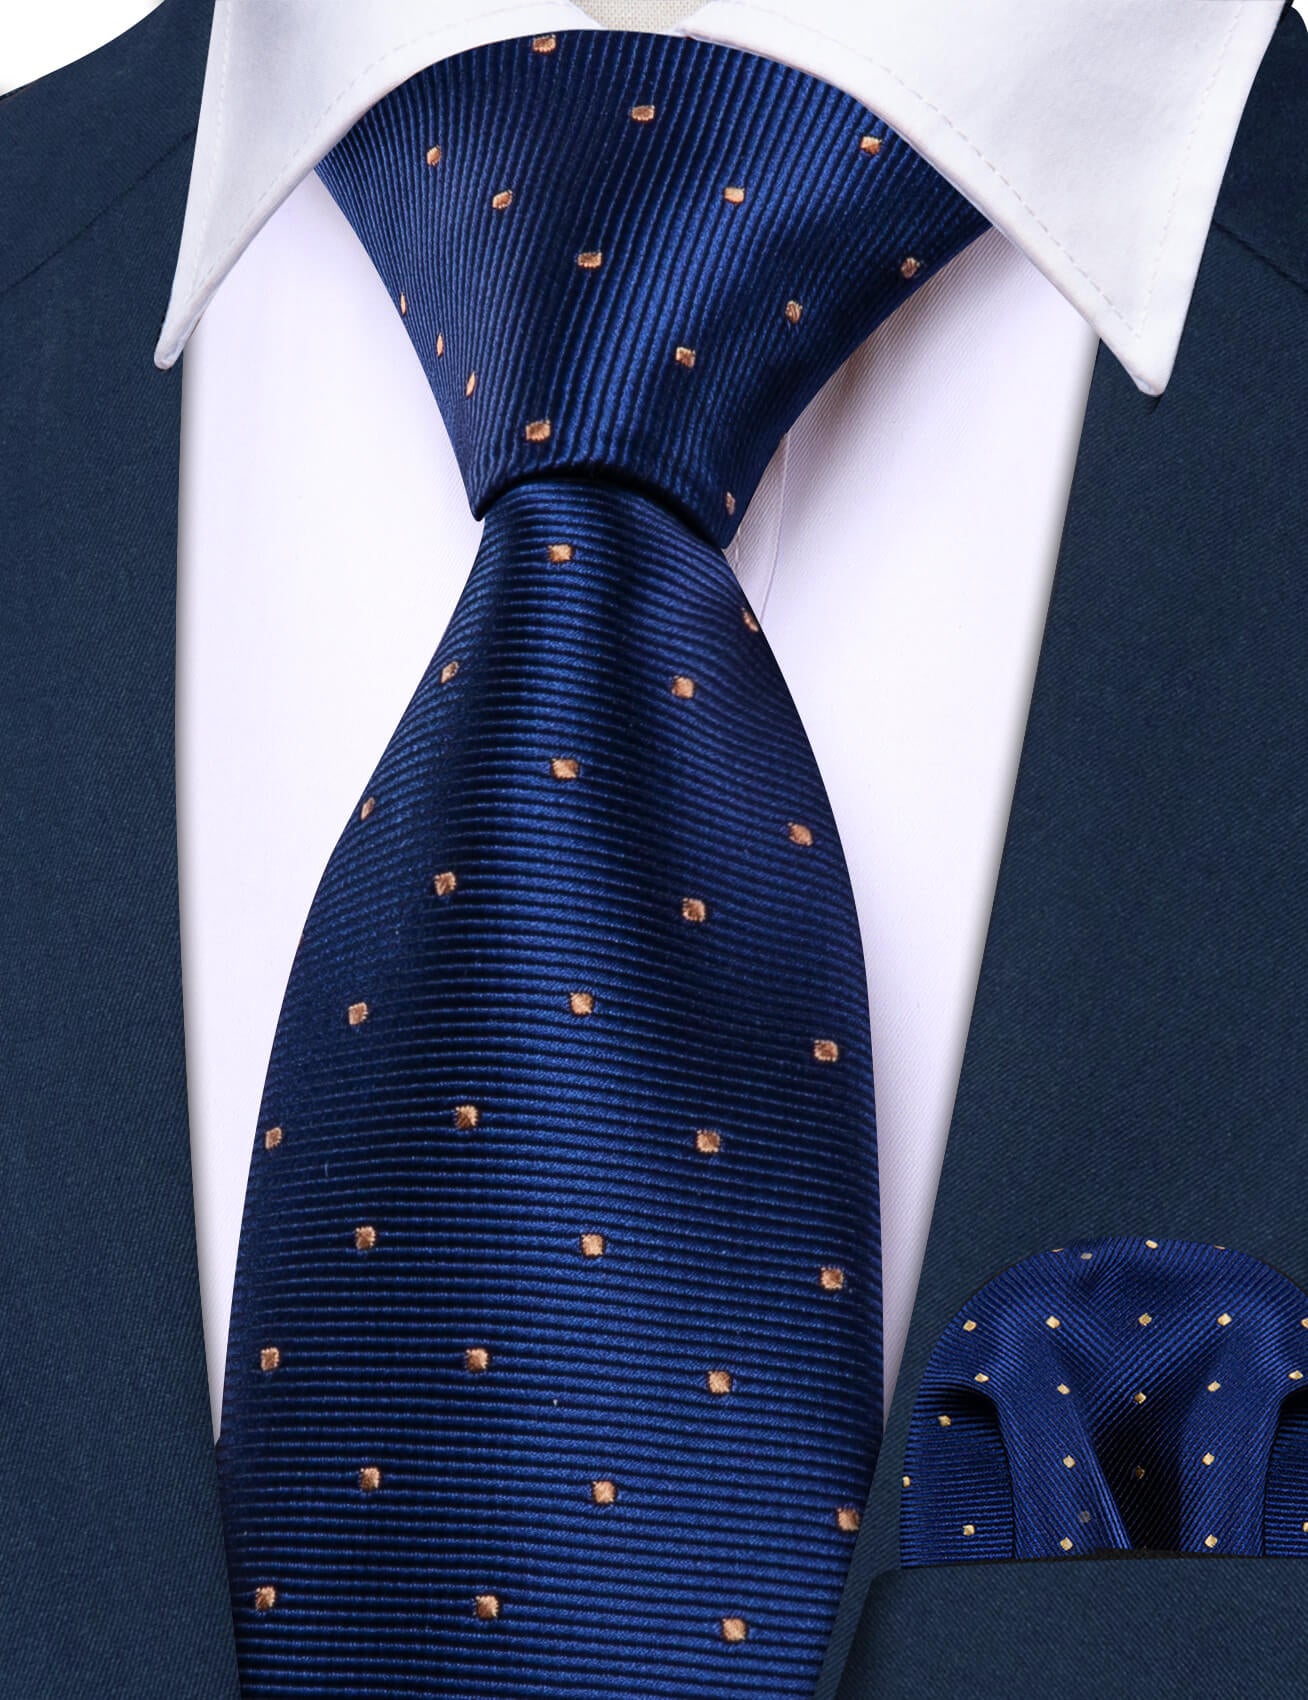 Barry.wang Kids Tie Navy Blue Plaid Children's Silk Tie Handkerchief Set